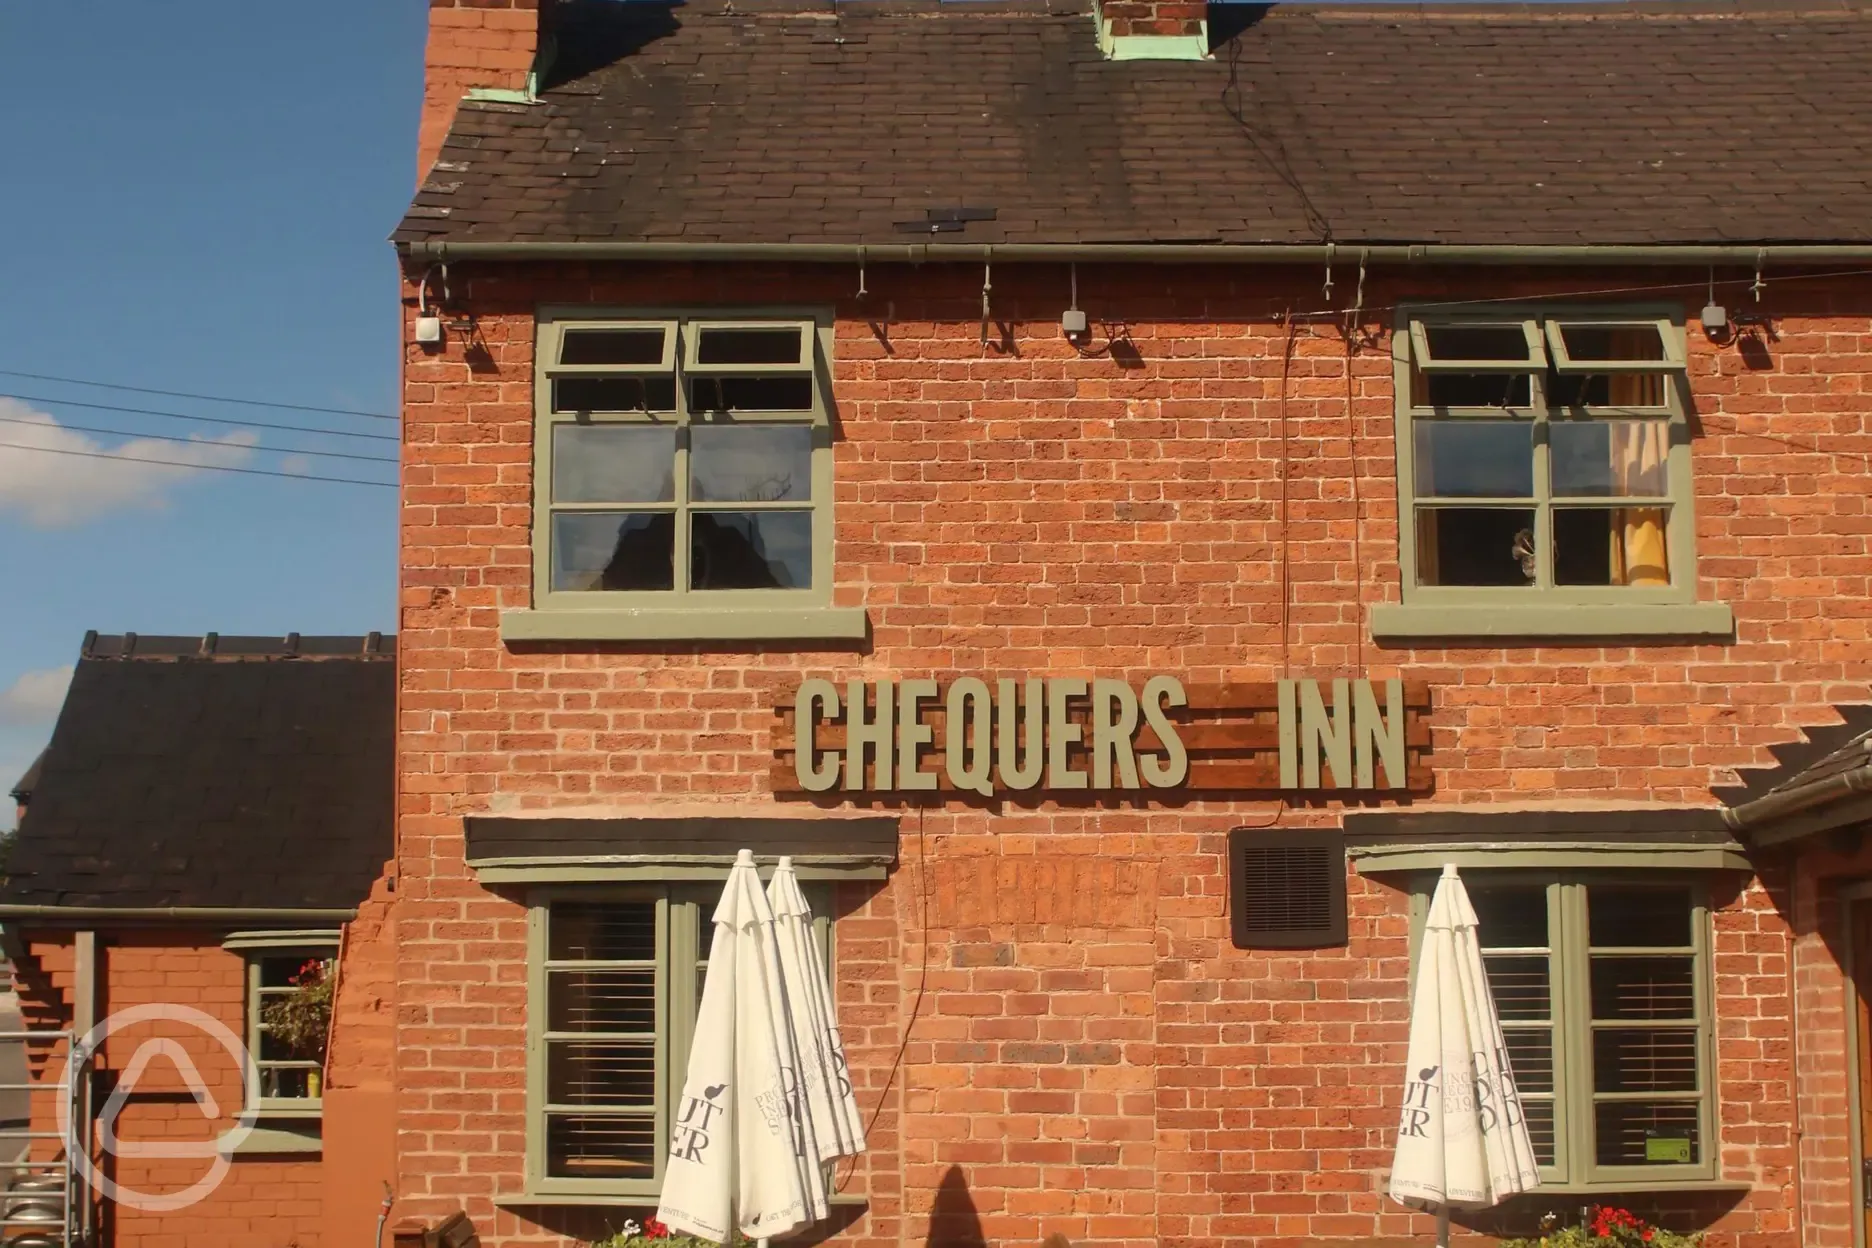 Outside The Chequers Inn